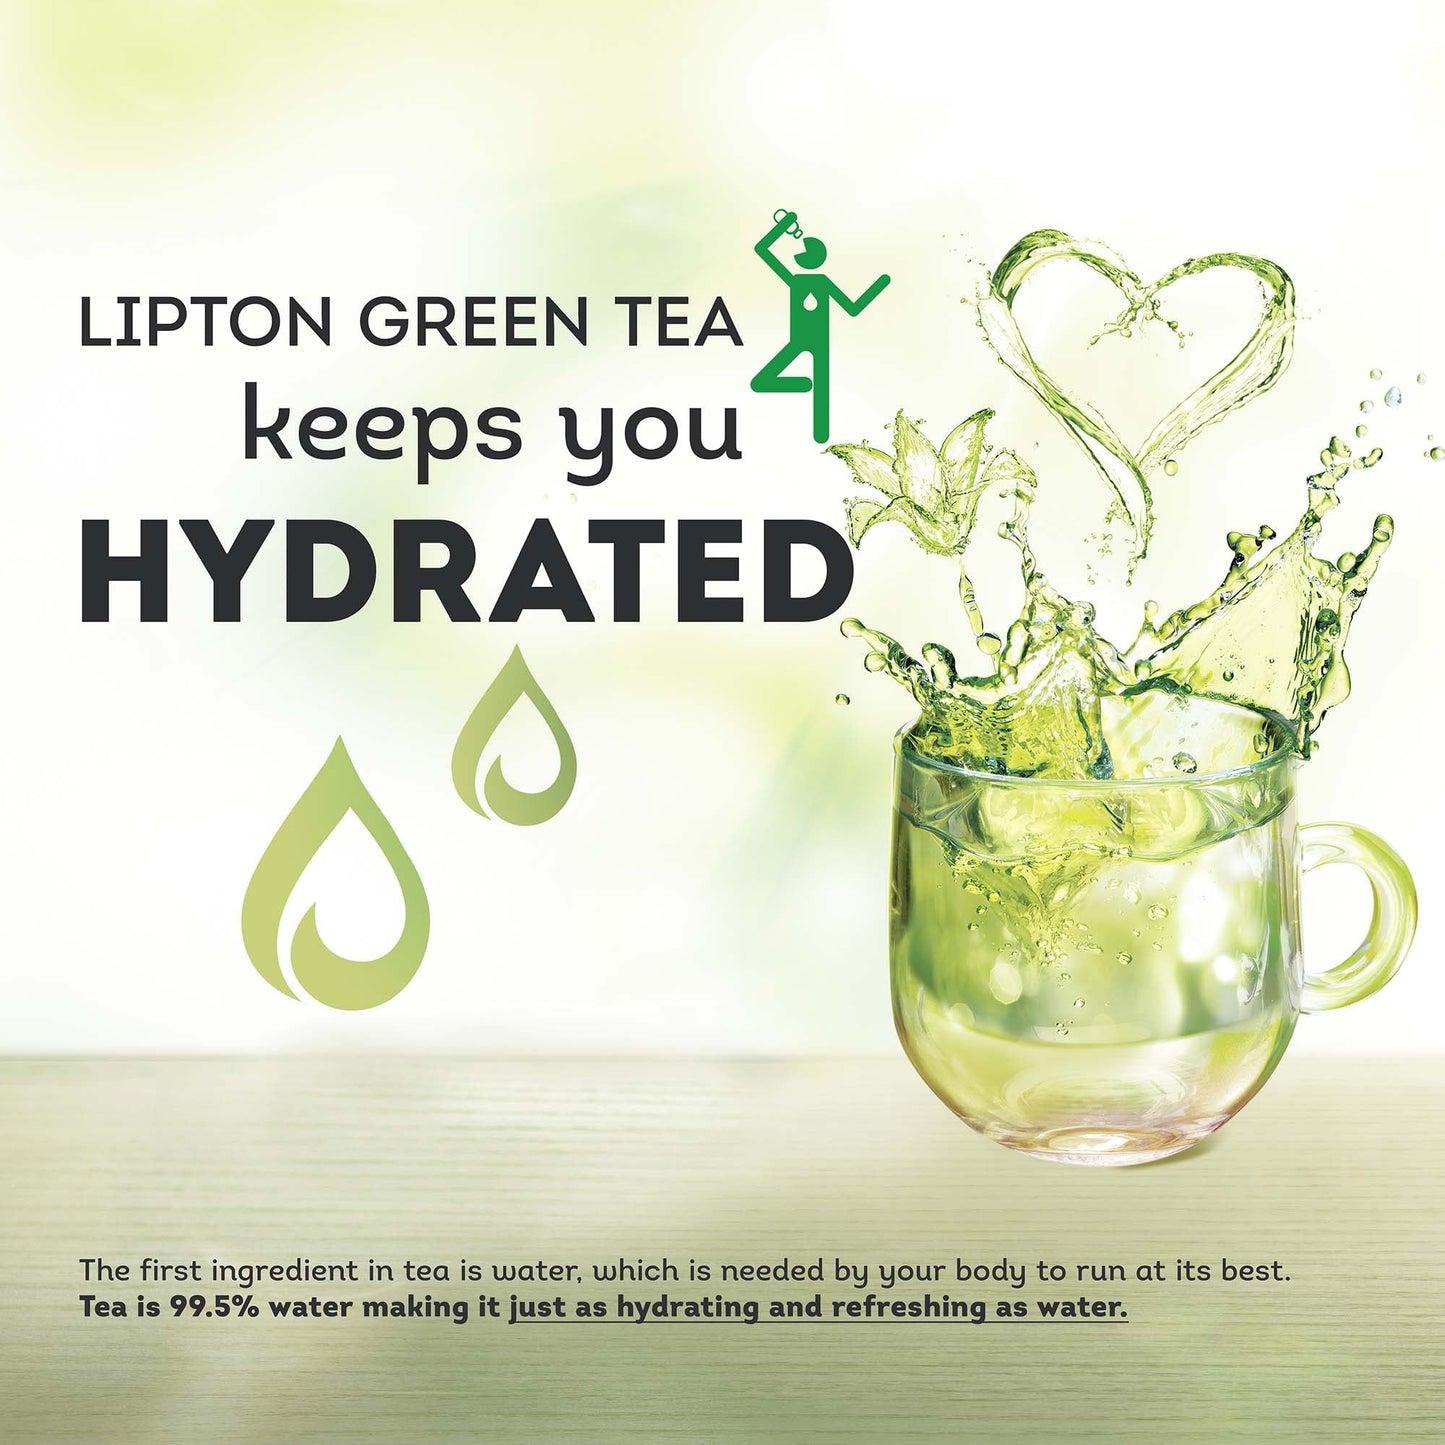 Lipton Green Tea, Lemon Ginseng, Can Help Support a Healthy Heart, Tea Bags 20 Count Box